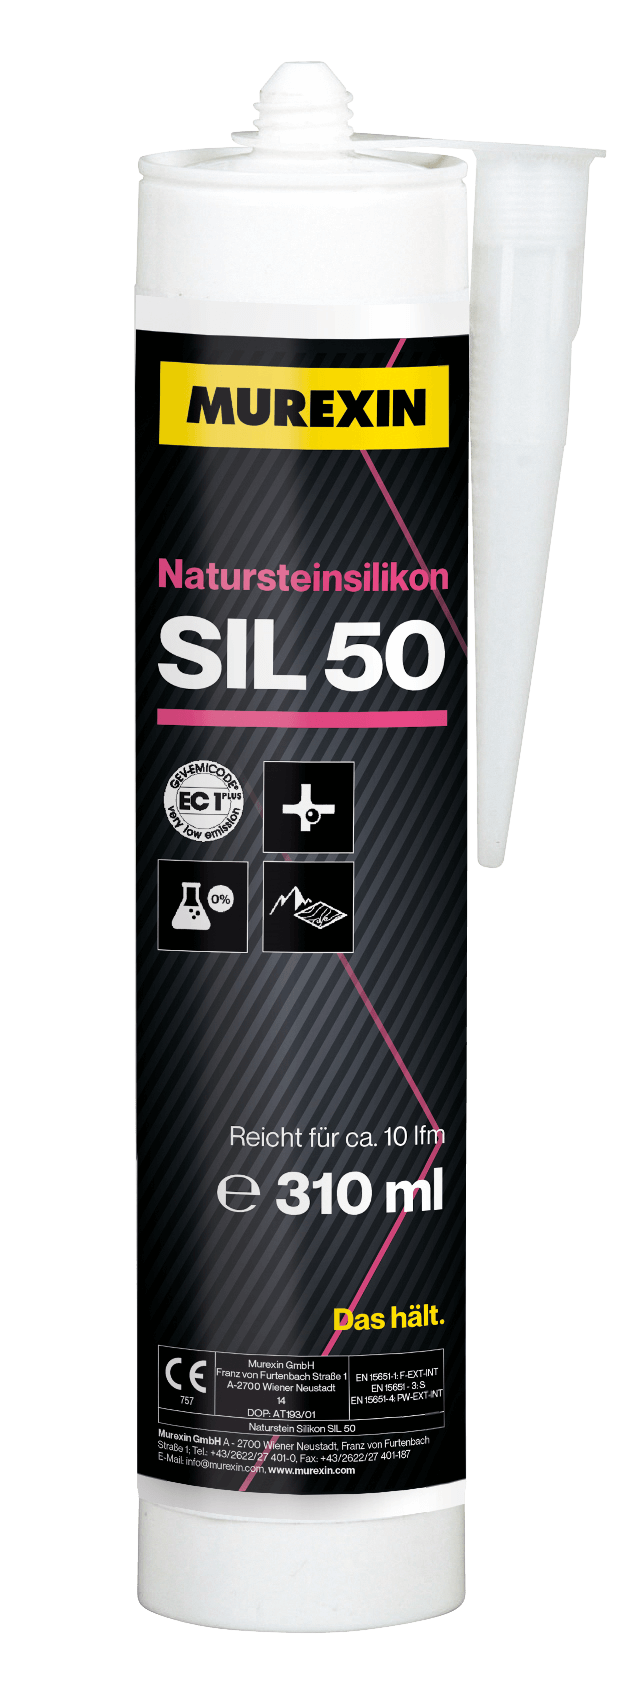 Natursteinsilikon SIL 50